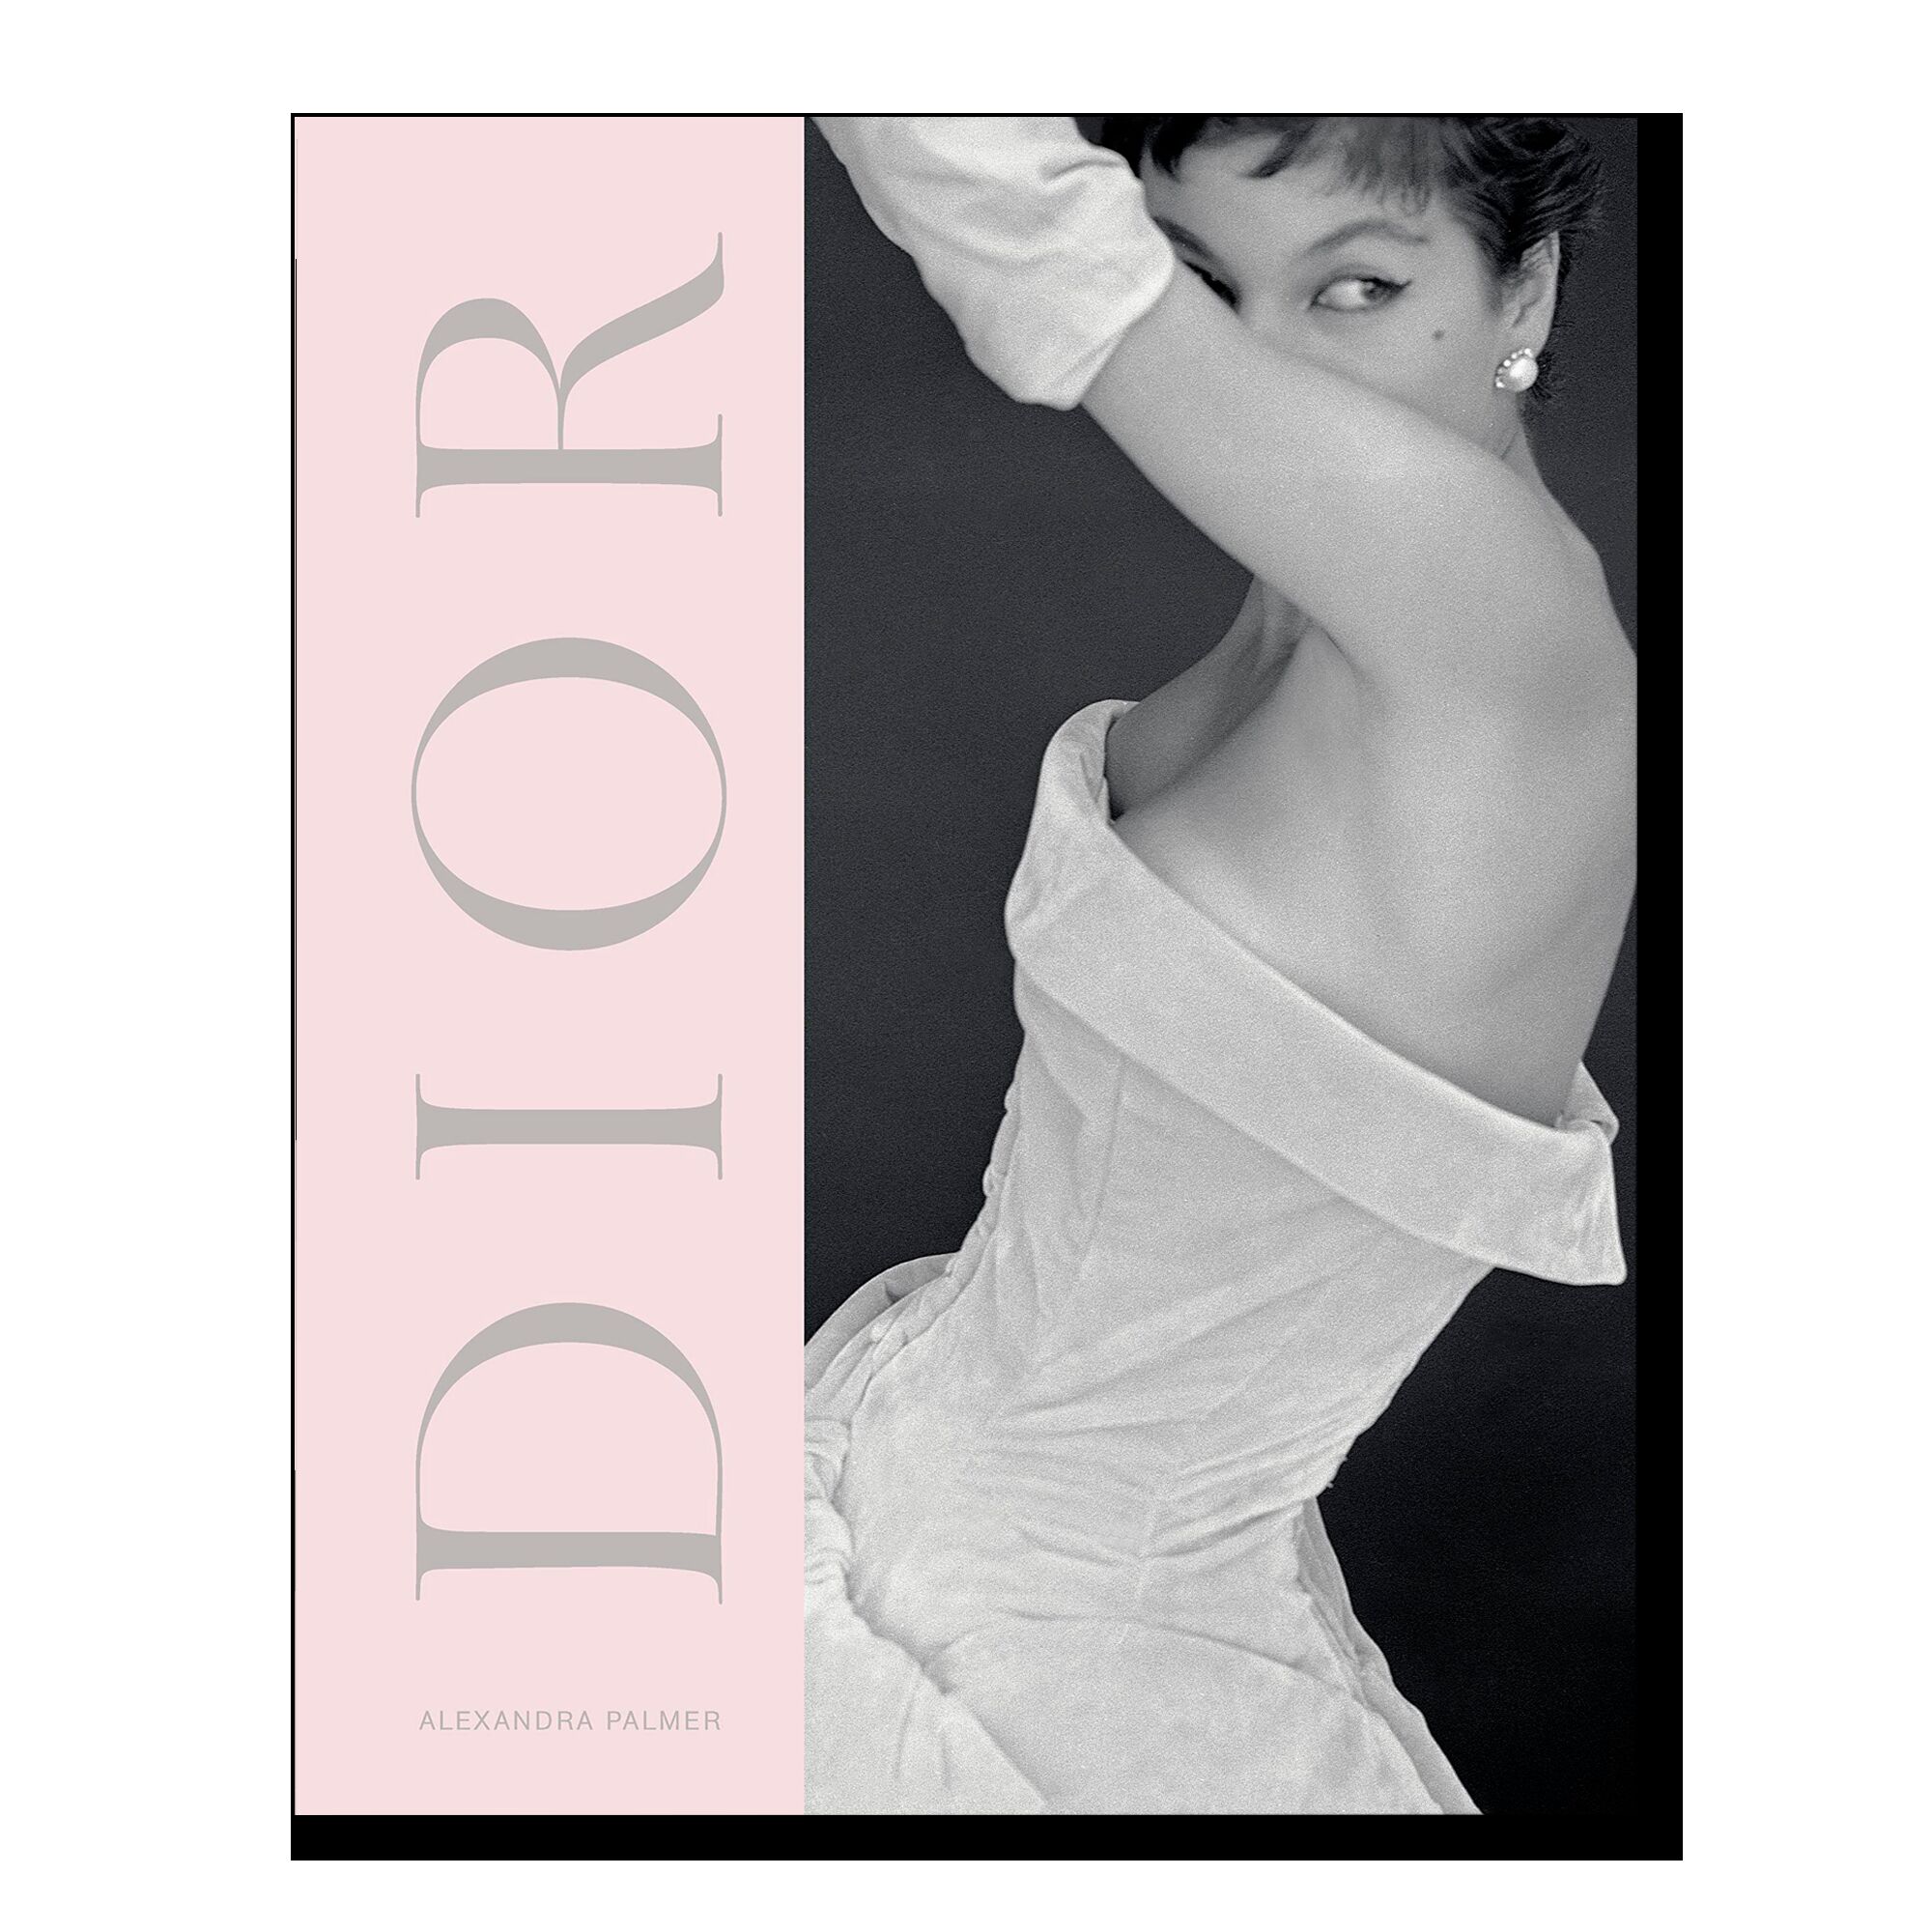 Dior: A New Look, a New Enterprise (1947-57)